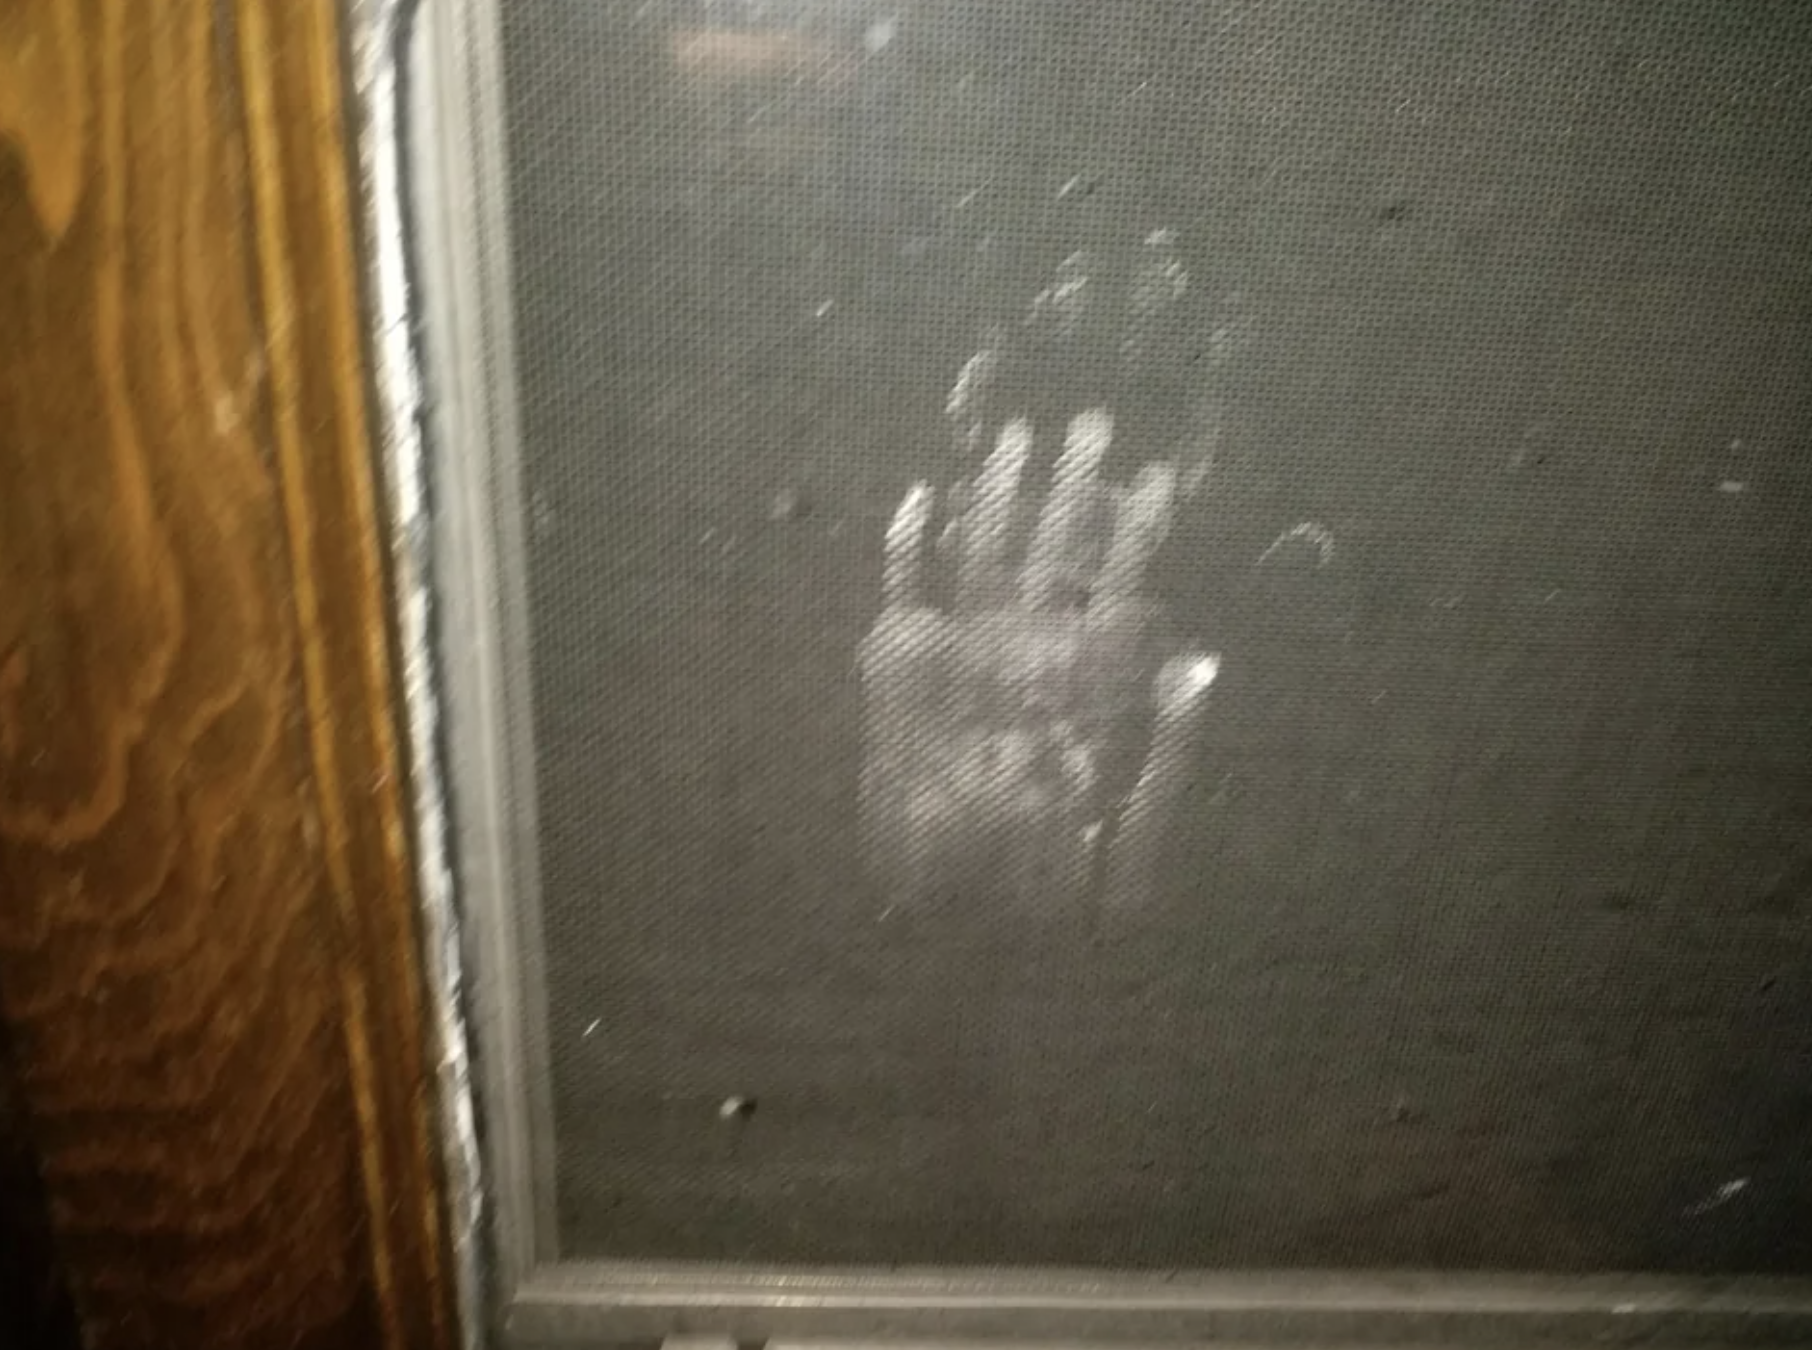 handprint on a window screen